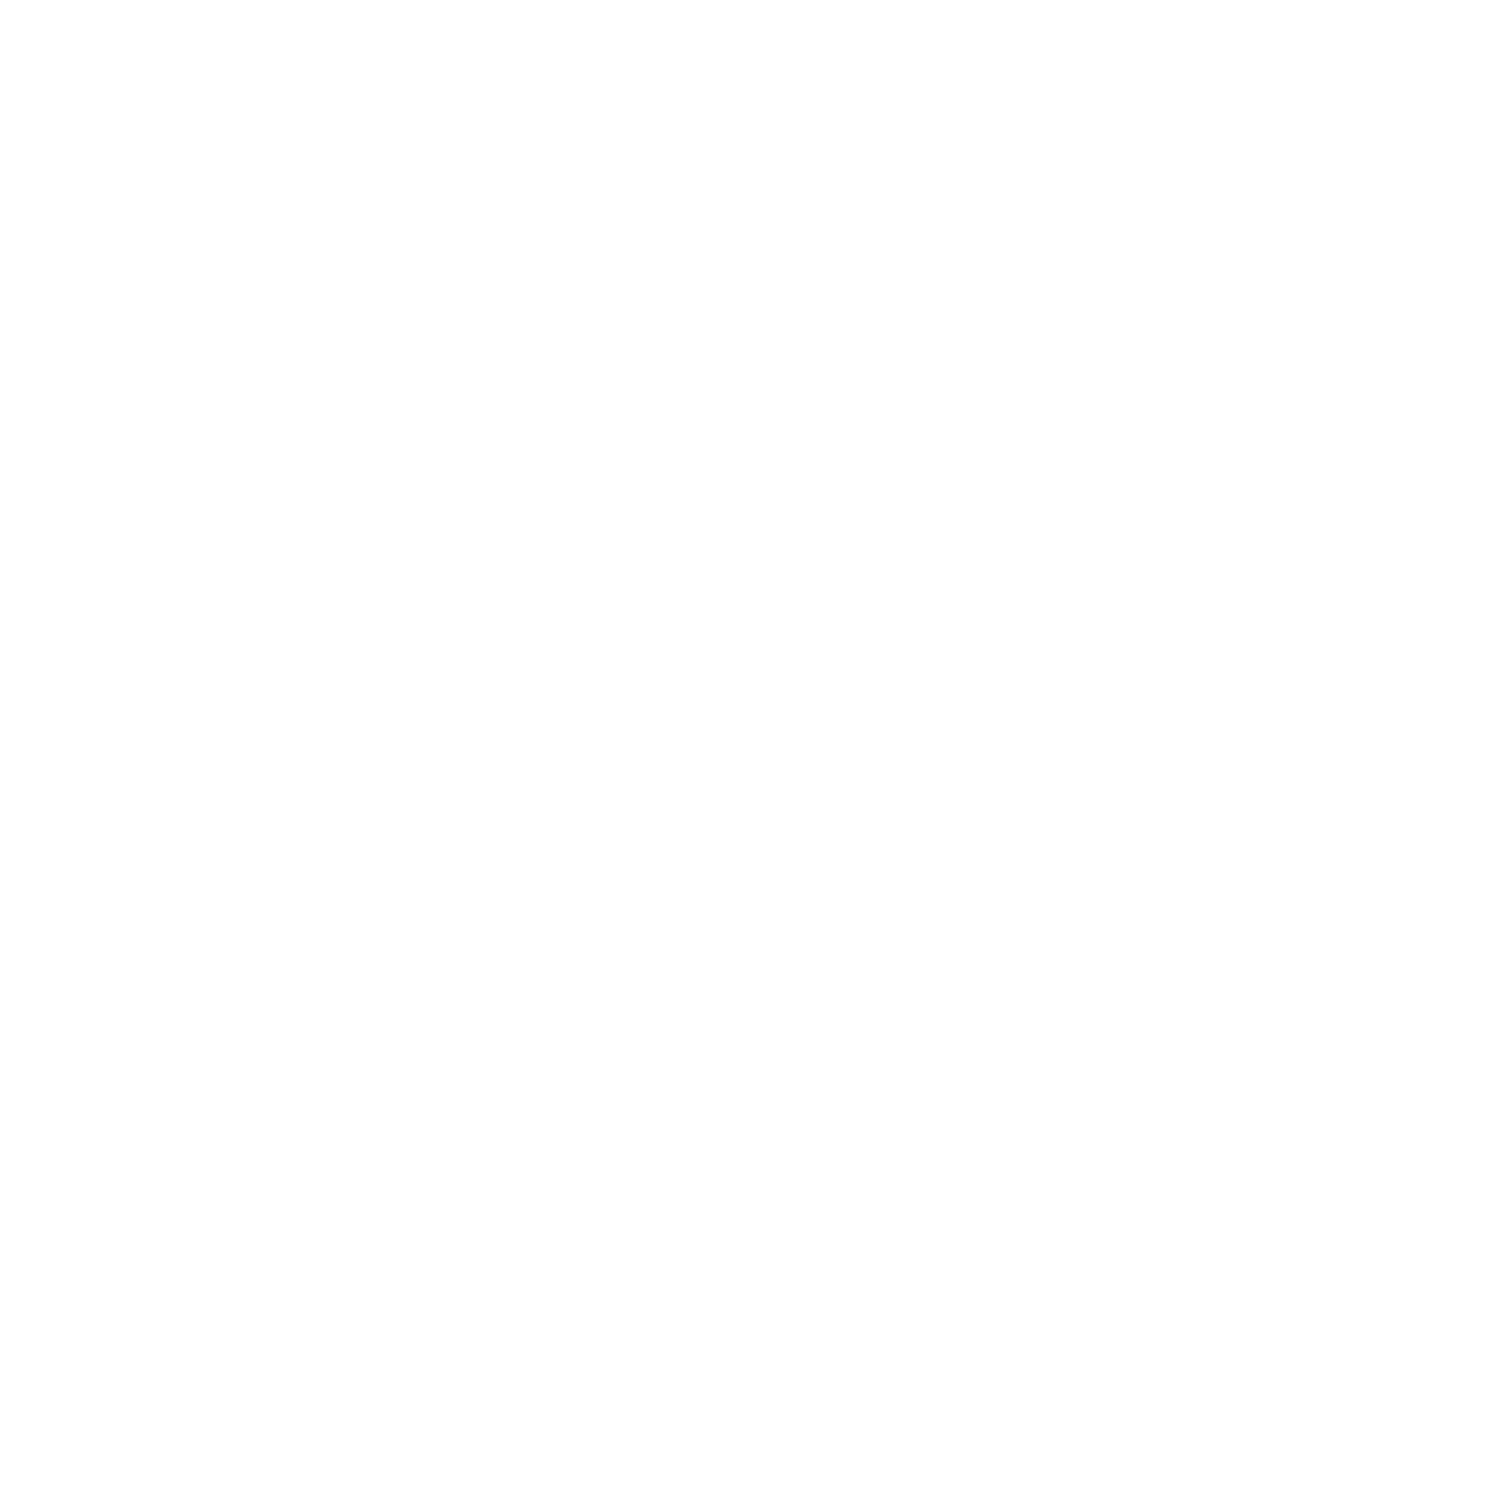 NASTASIA ZIBRAT PHOTOGRAPHY